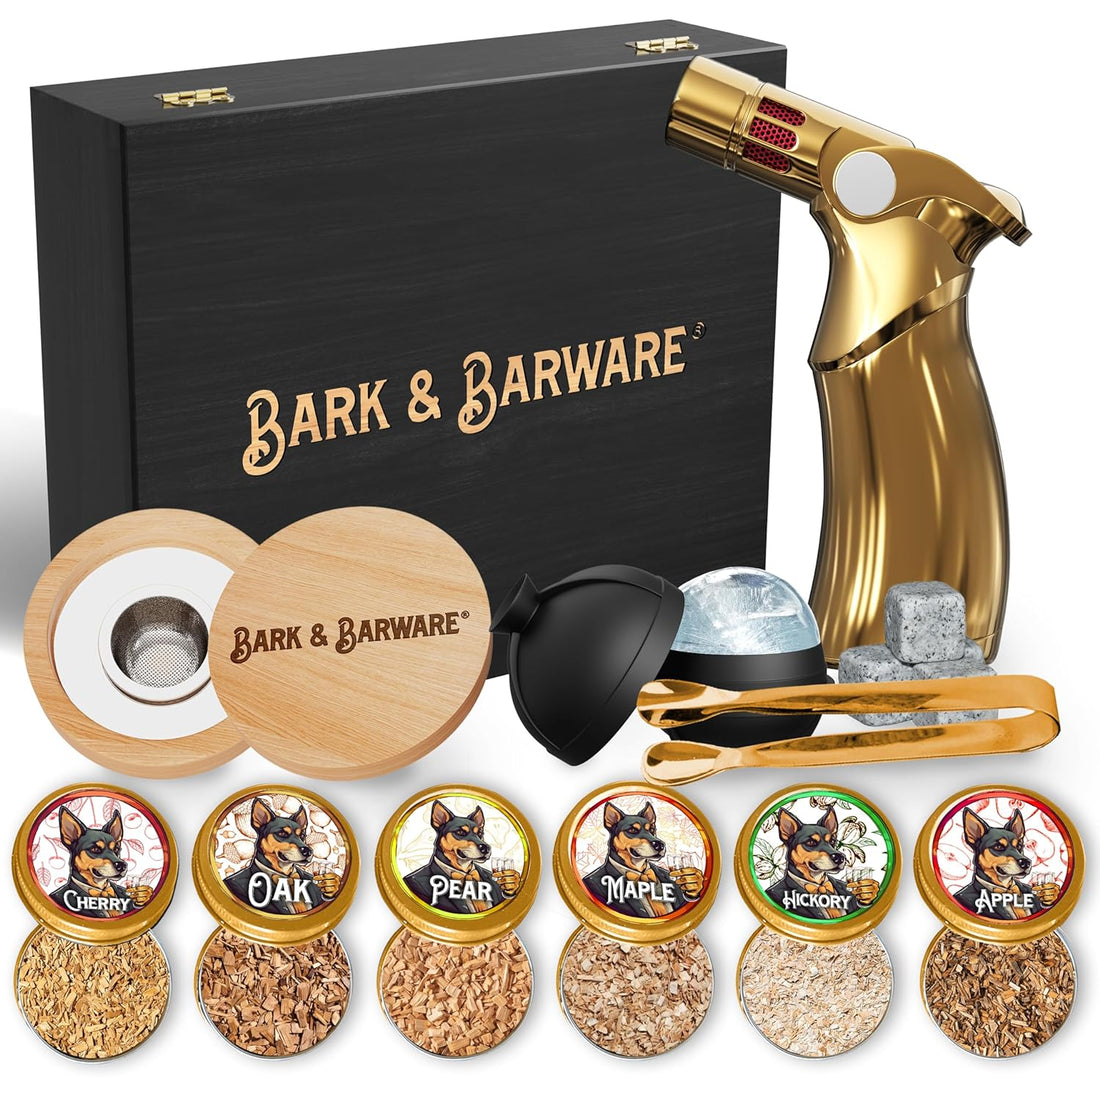 Bark & Barware Premium Cocktail Smoker Kit with Torch - Black Wood Box, Gold Tools, 6 Flavors Wood Chips - Old Fashion Bourbon Smoker Kit - Smoking Cocktails, Drinks & Mixology (no Butane)